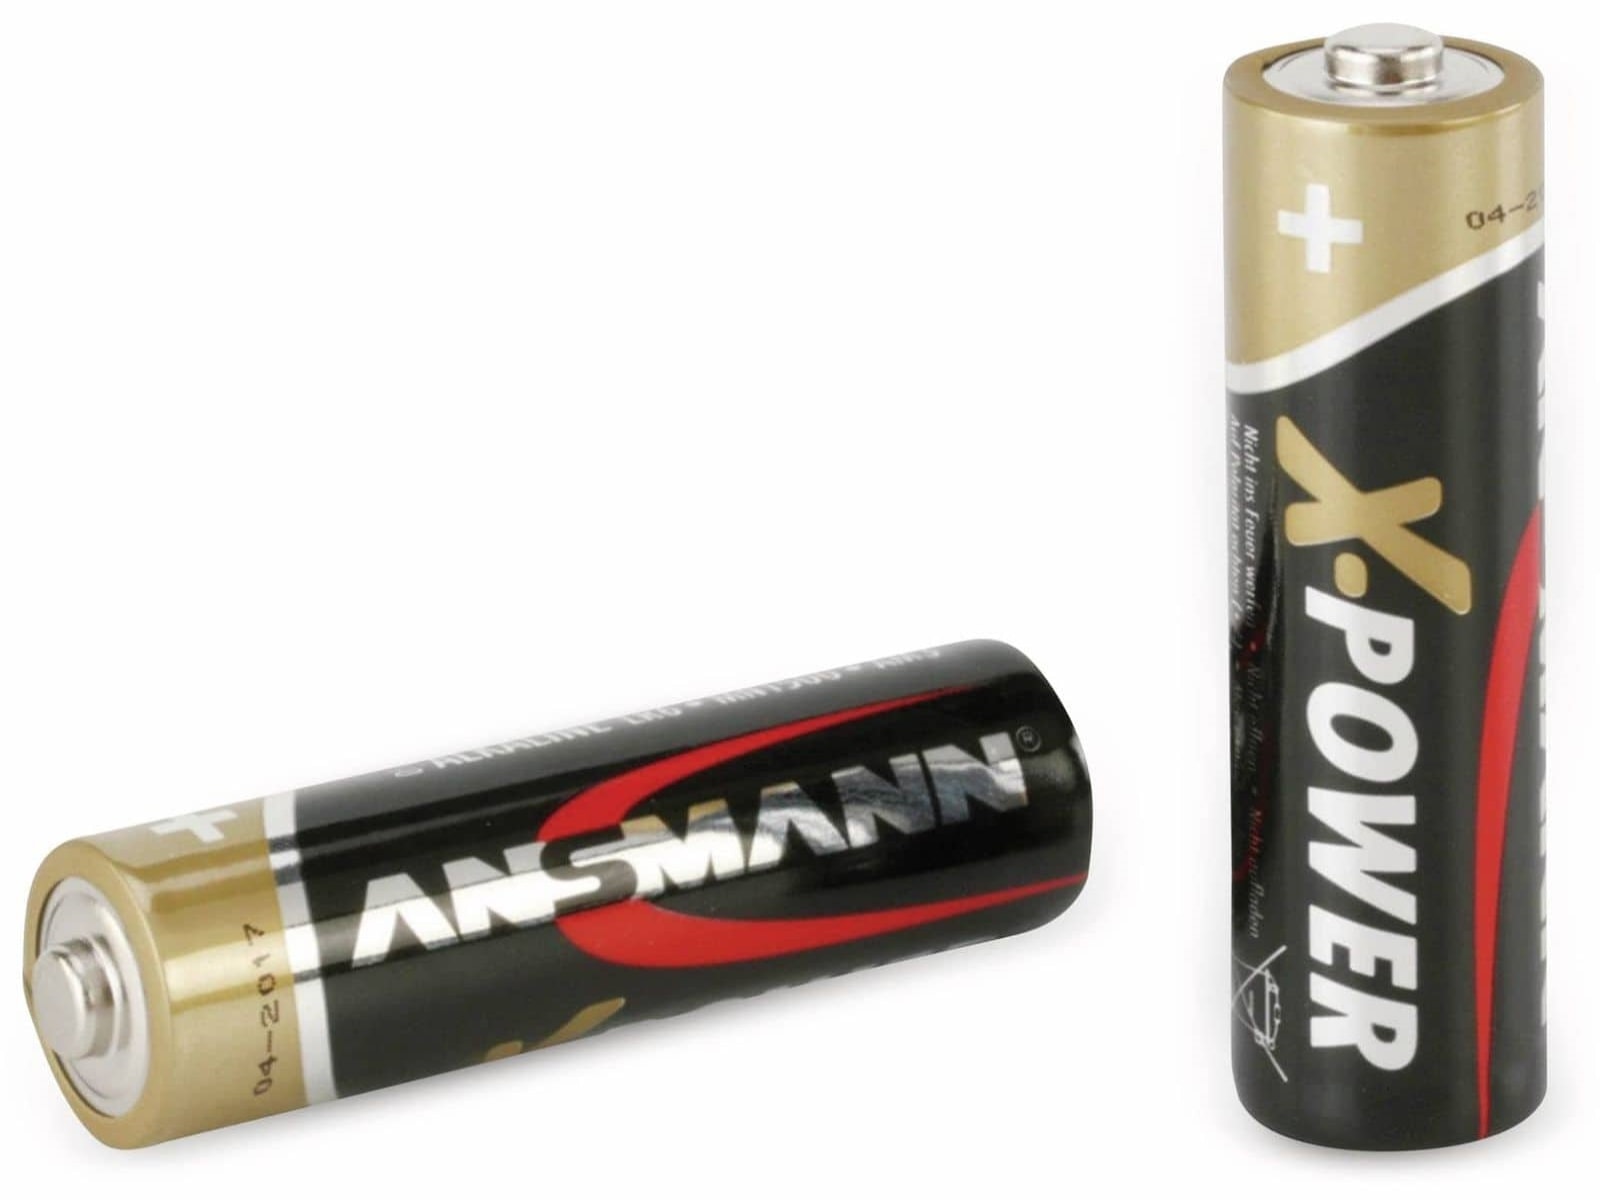 ANSMANN Mignon-Batterie, XPower, 3000mAh, 4 Stück